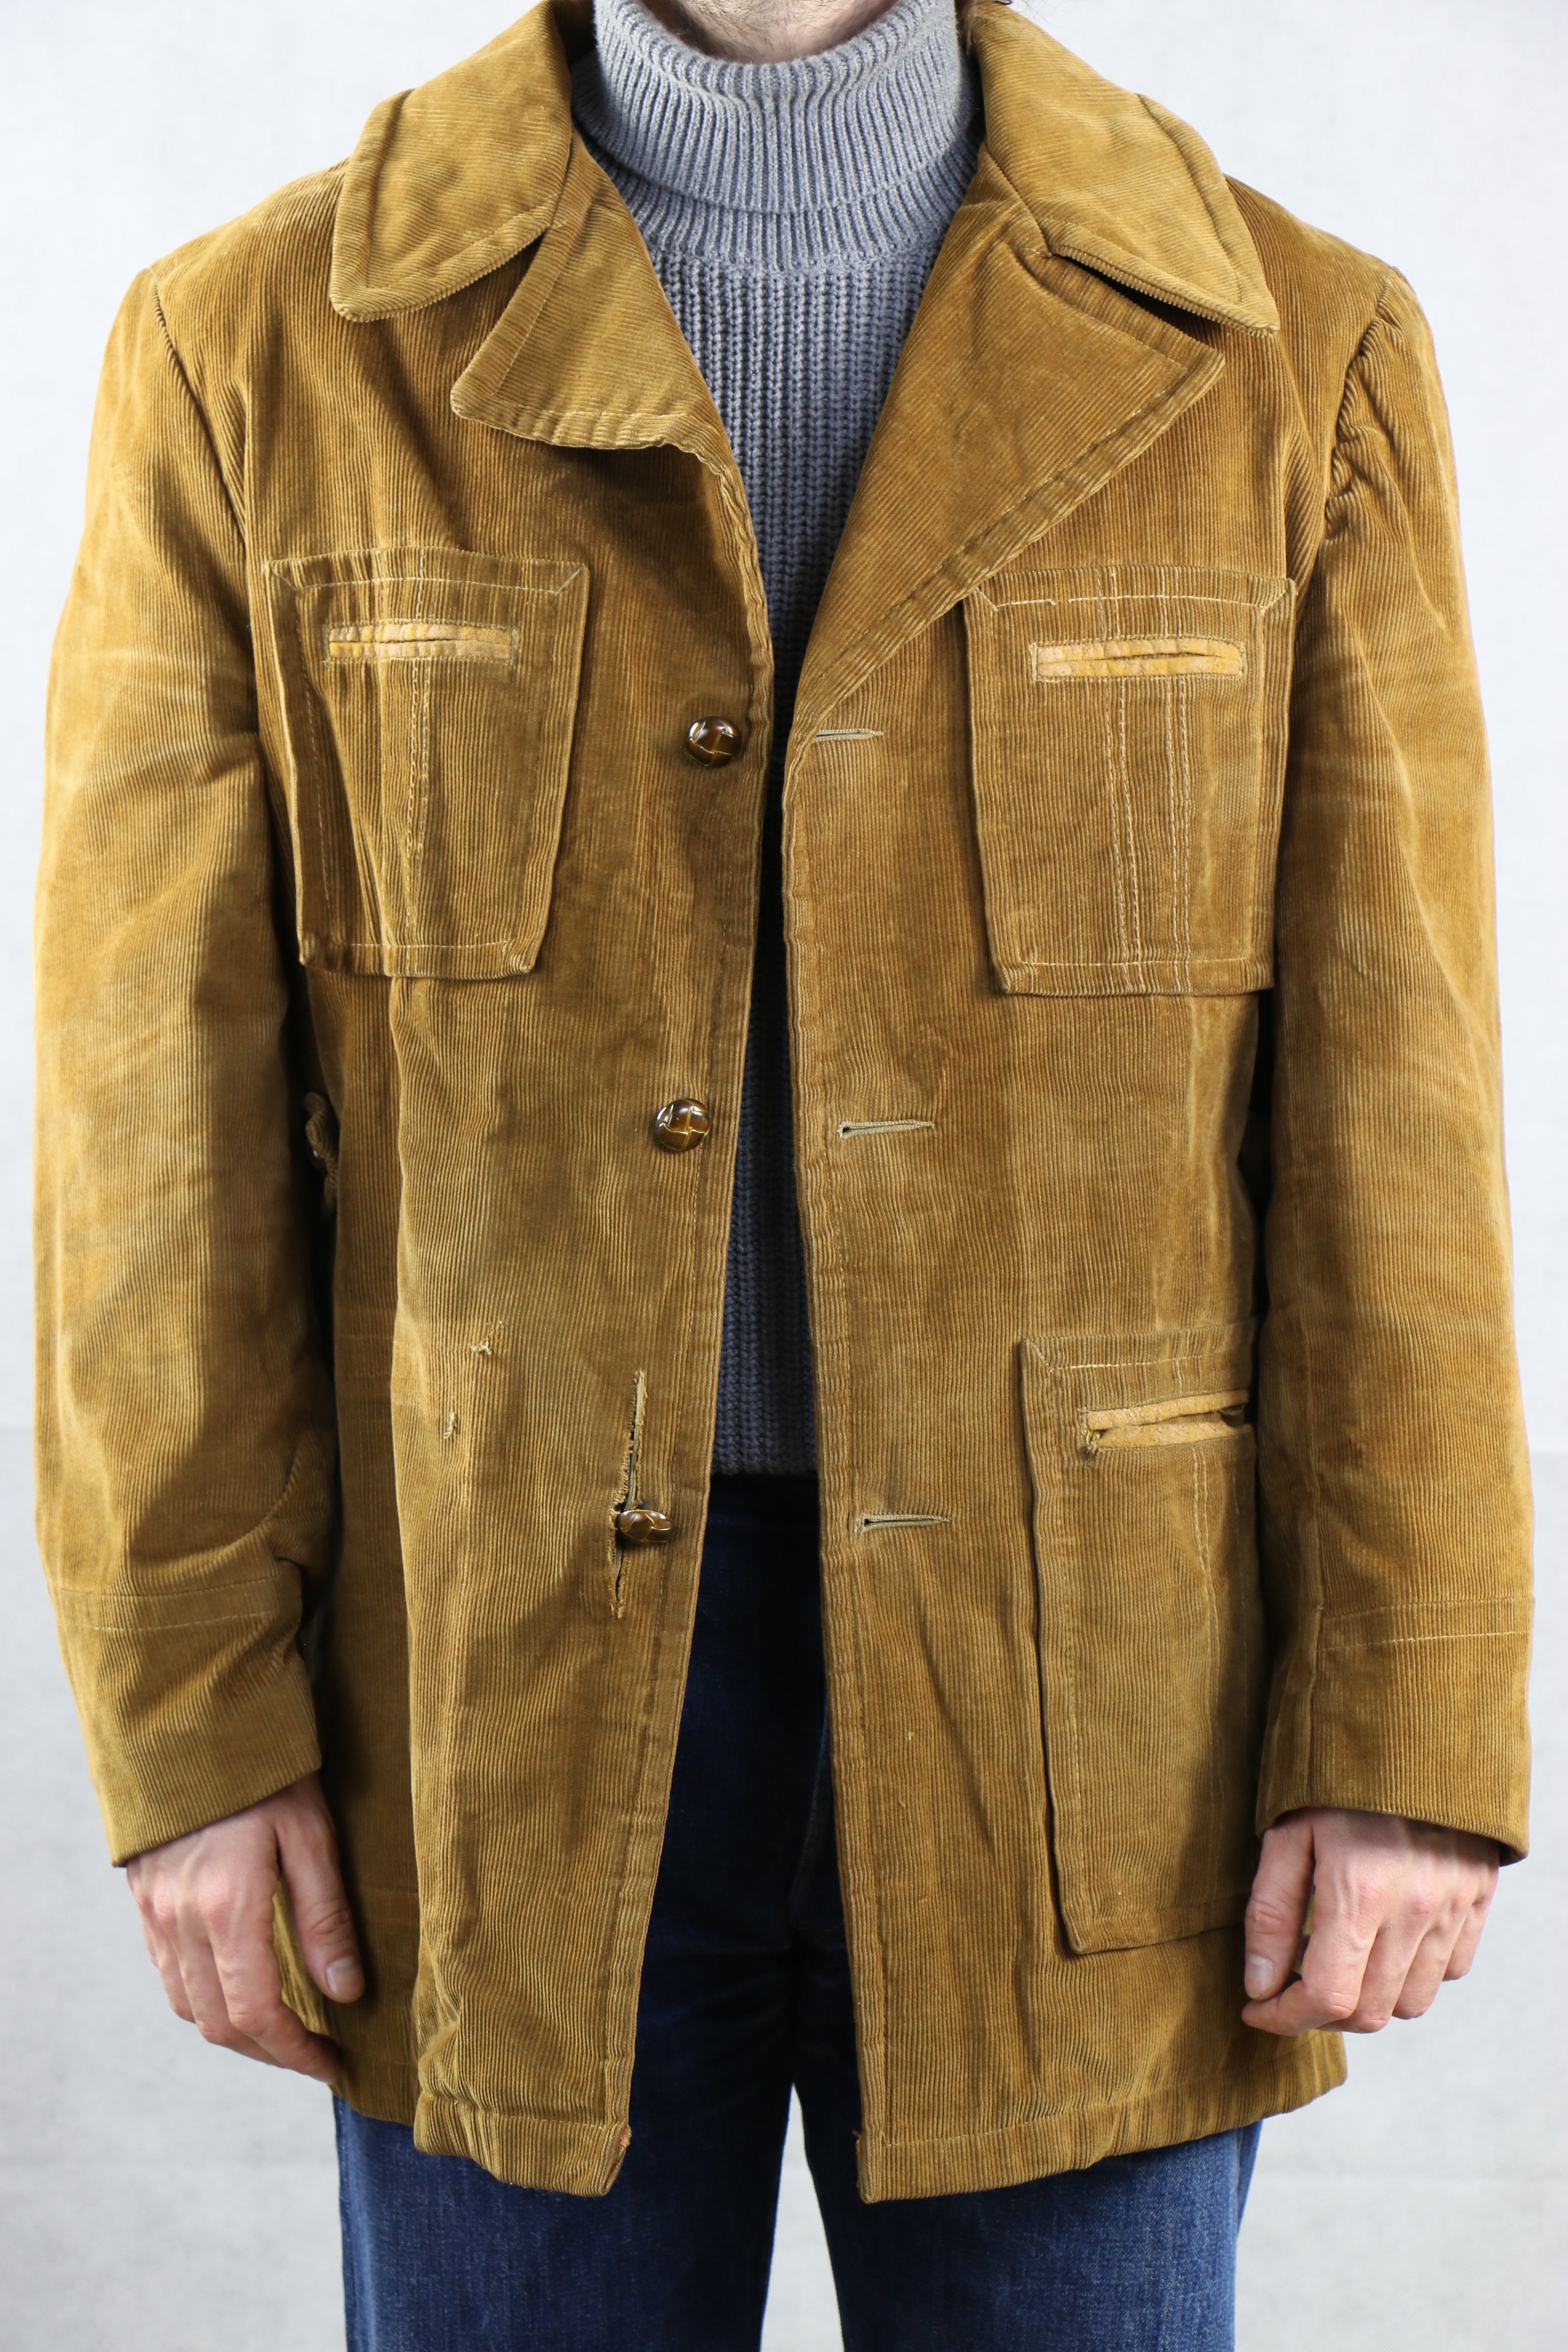 JC Penney Corduroy Jacket ~ Vintage Store Clochard92.com